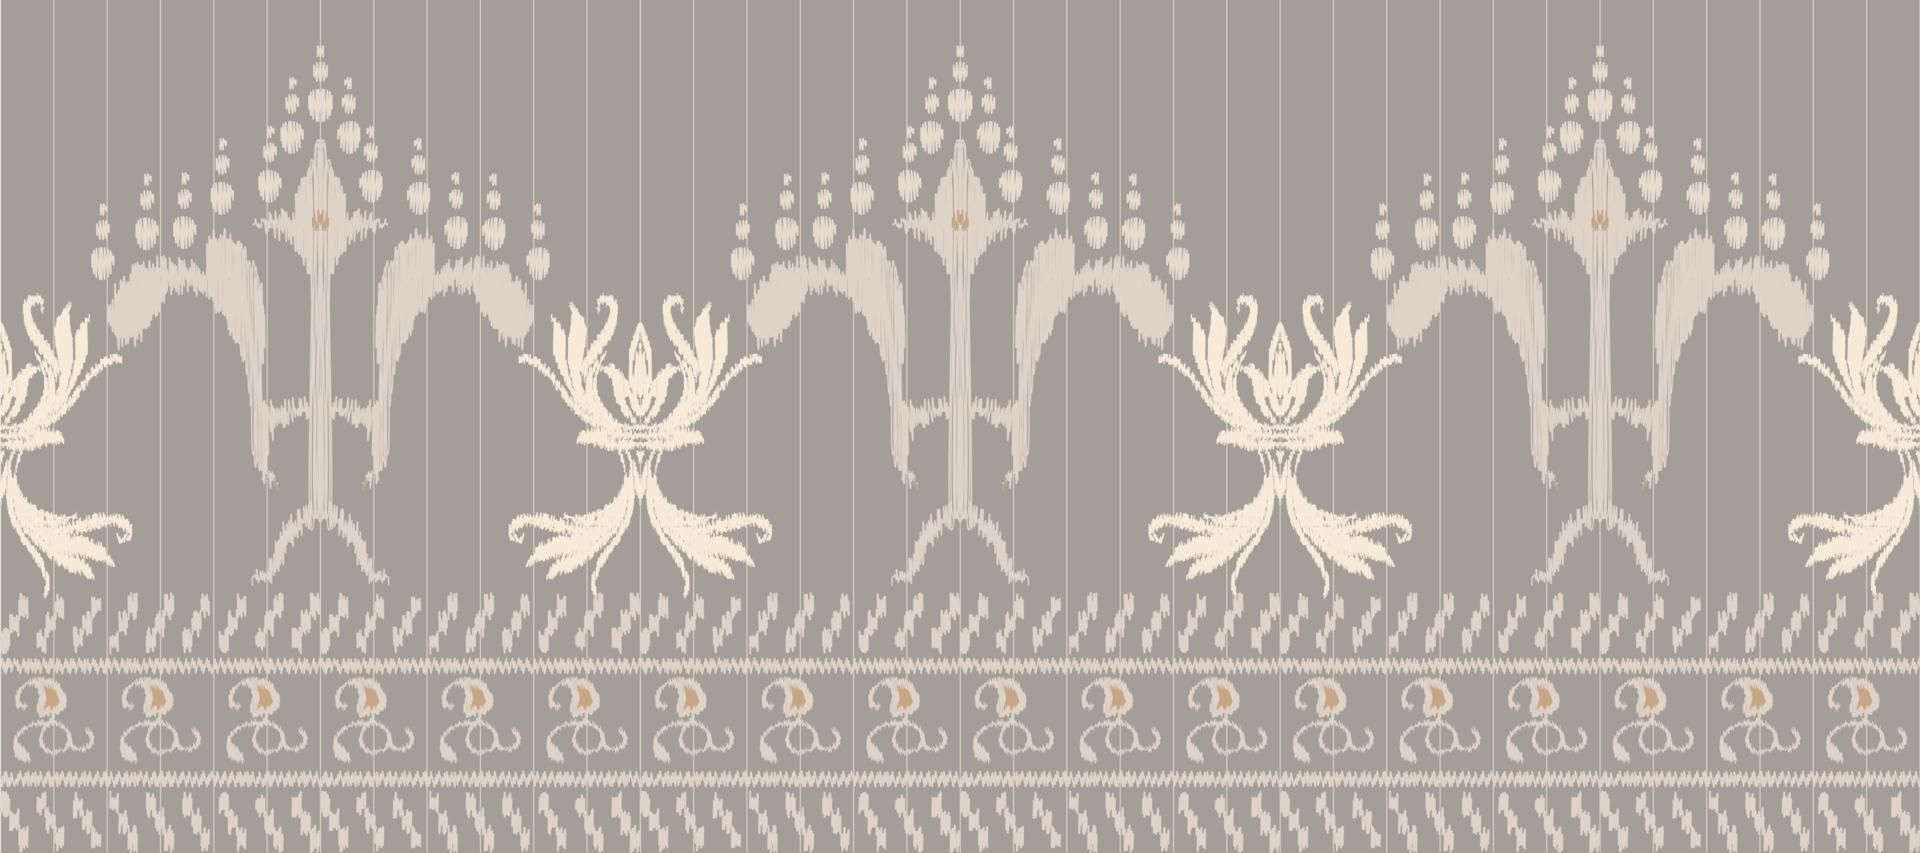 africano ikat cachemir bordado. batik textil ikat flores sin costura modelo digital vector diseño para impresión sari curti borneo tela frontera cepillo elegante